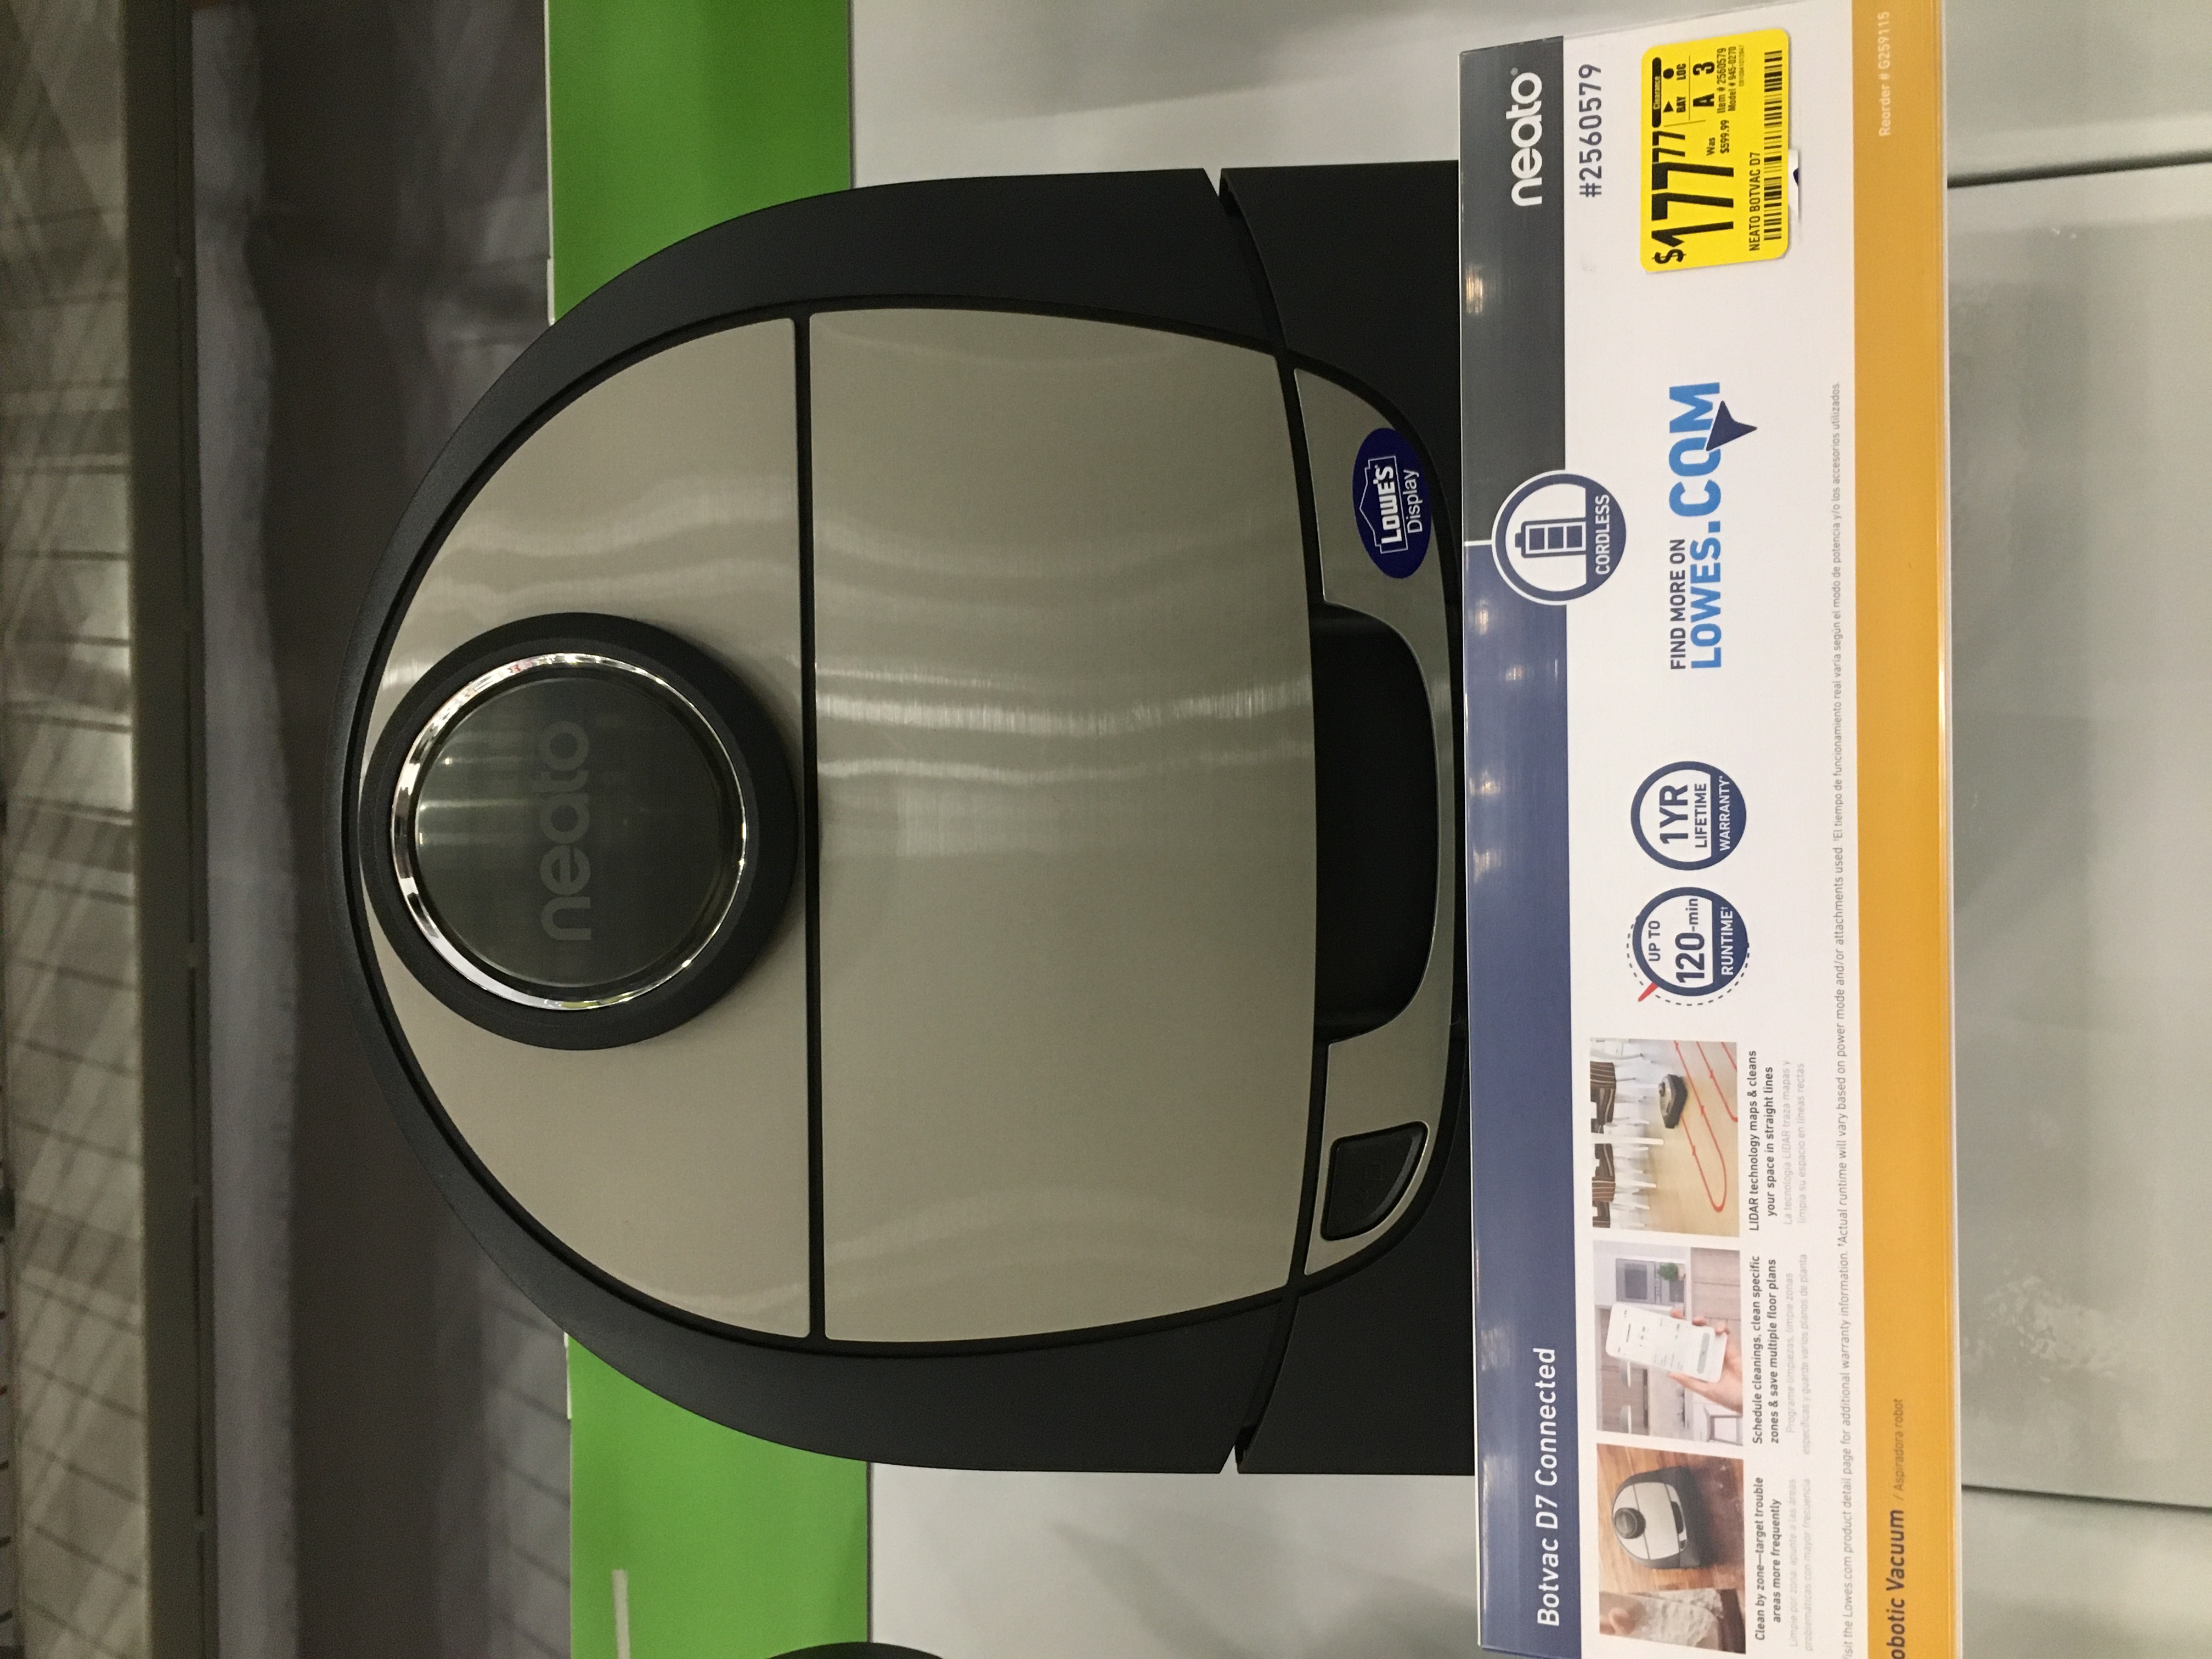 Neato Robotics D7 Connected Black Auto Charging Robotic Vacuum - $177.77 (in store only)